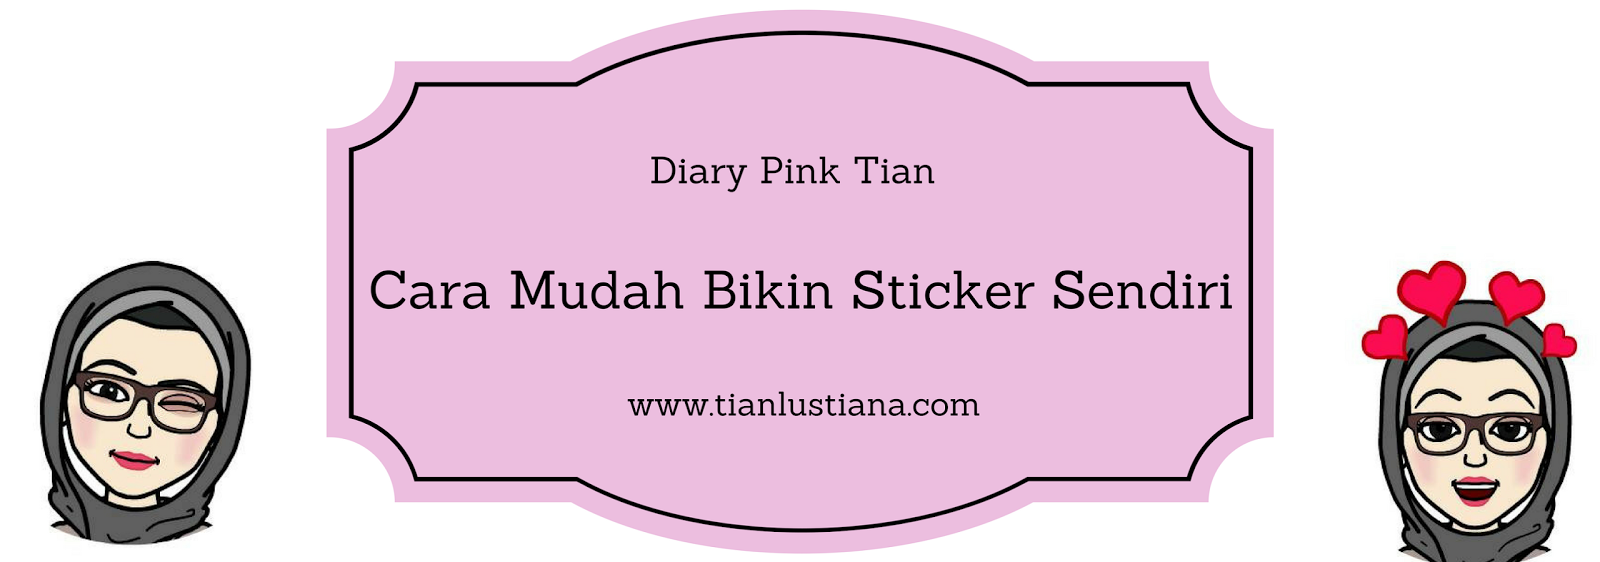 Cara Mudah Bikin Sticker Sendiri Diary Pink Tian